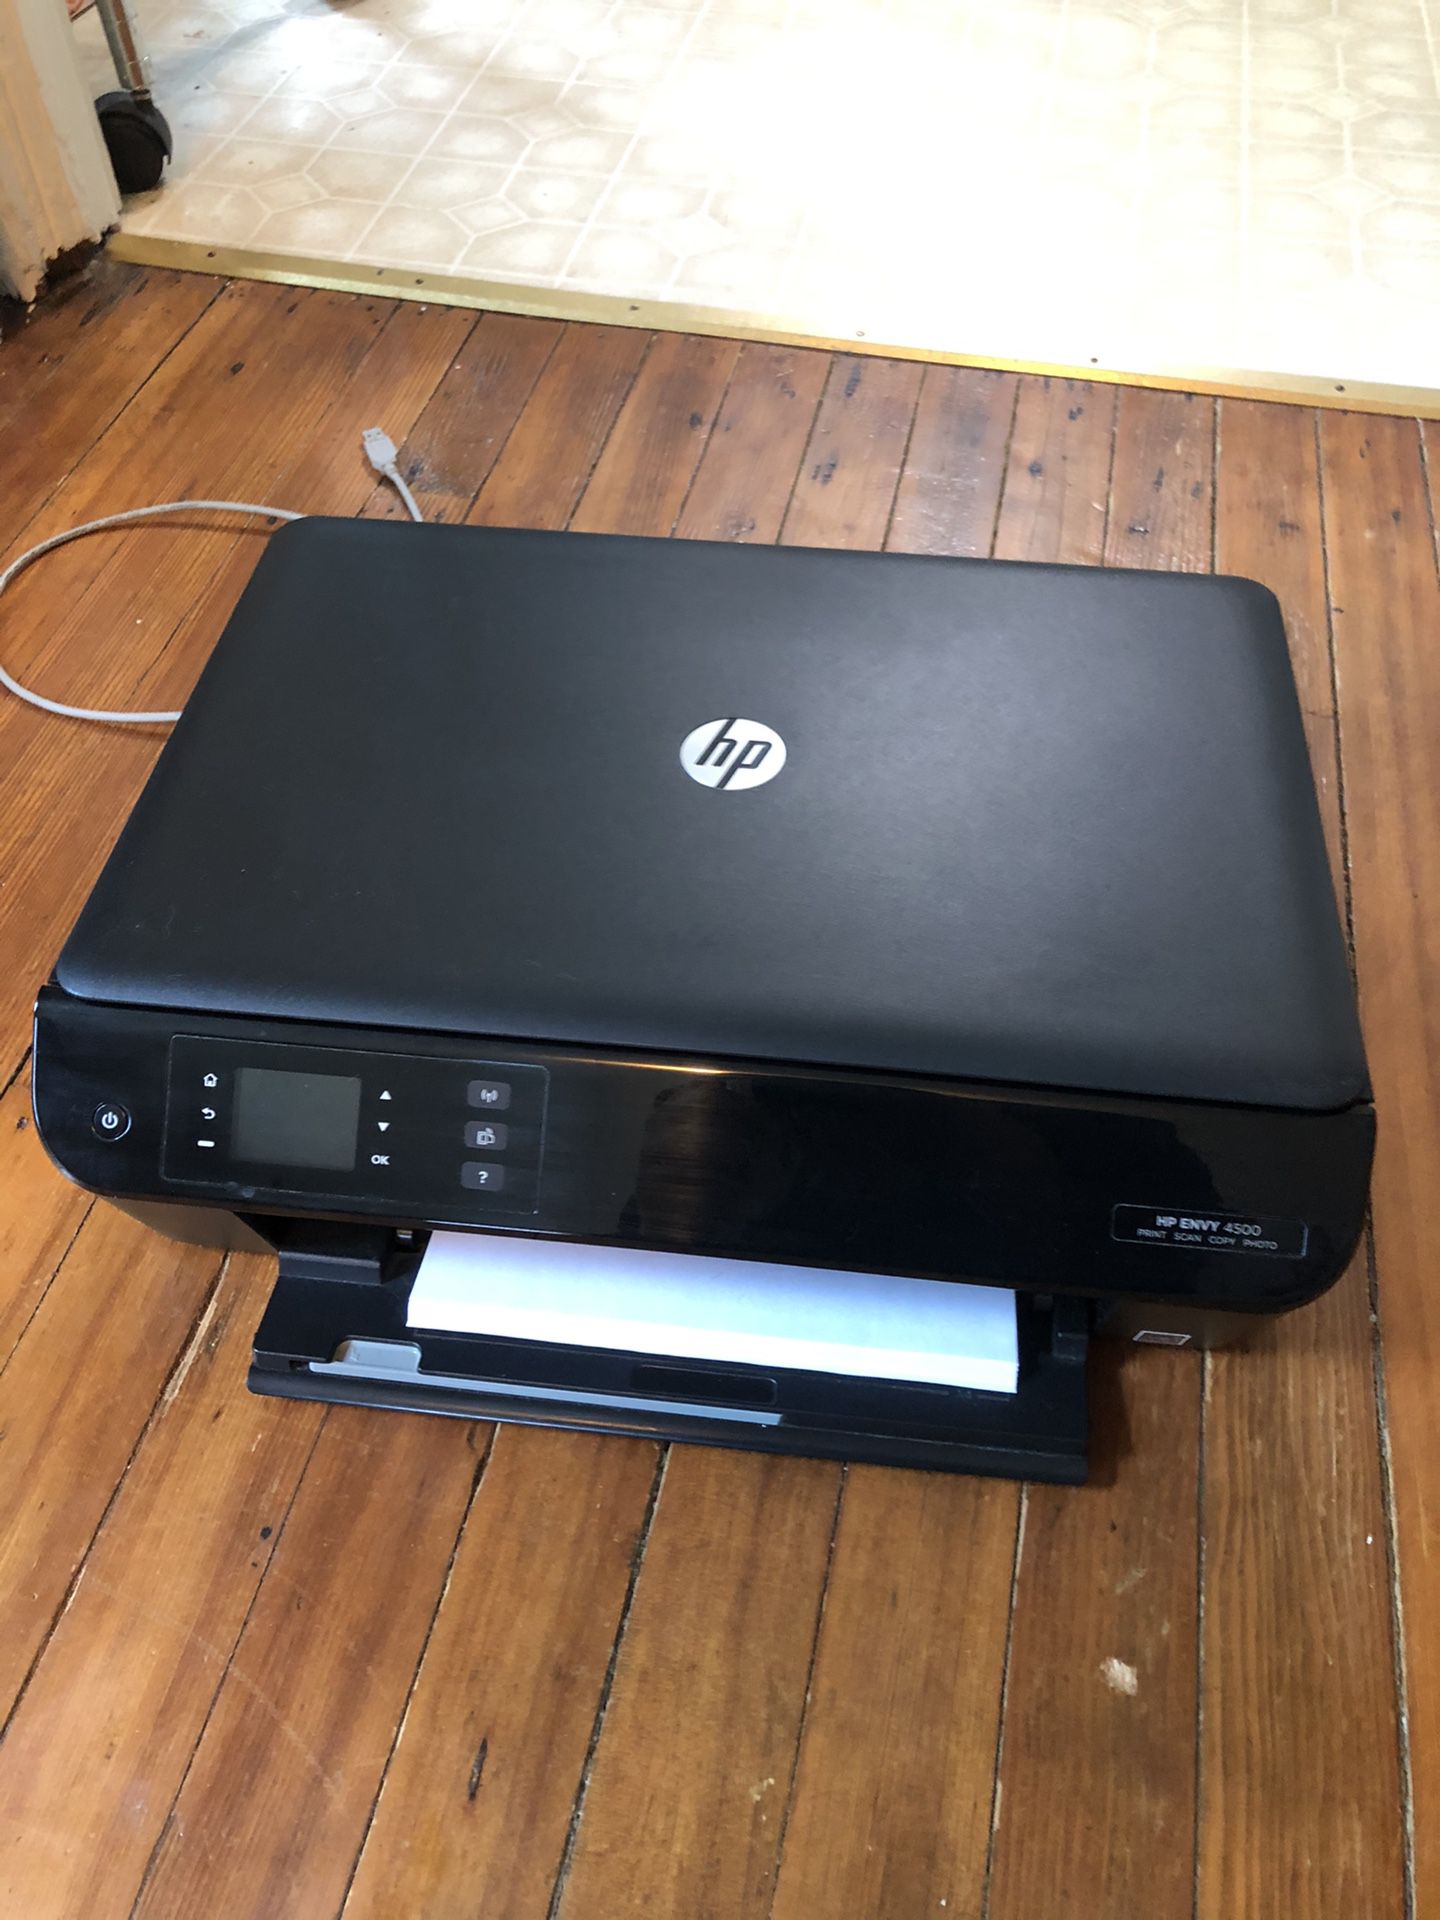 HP envy 4500 printer